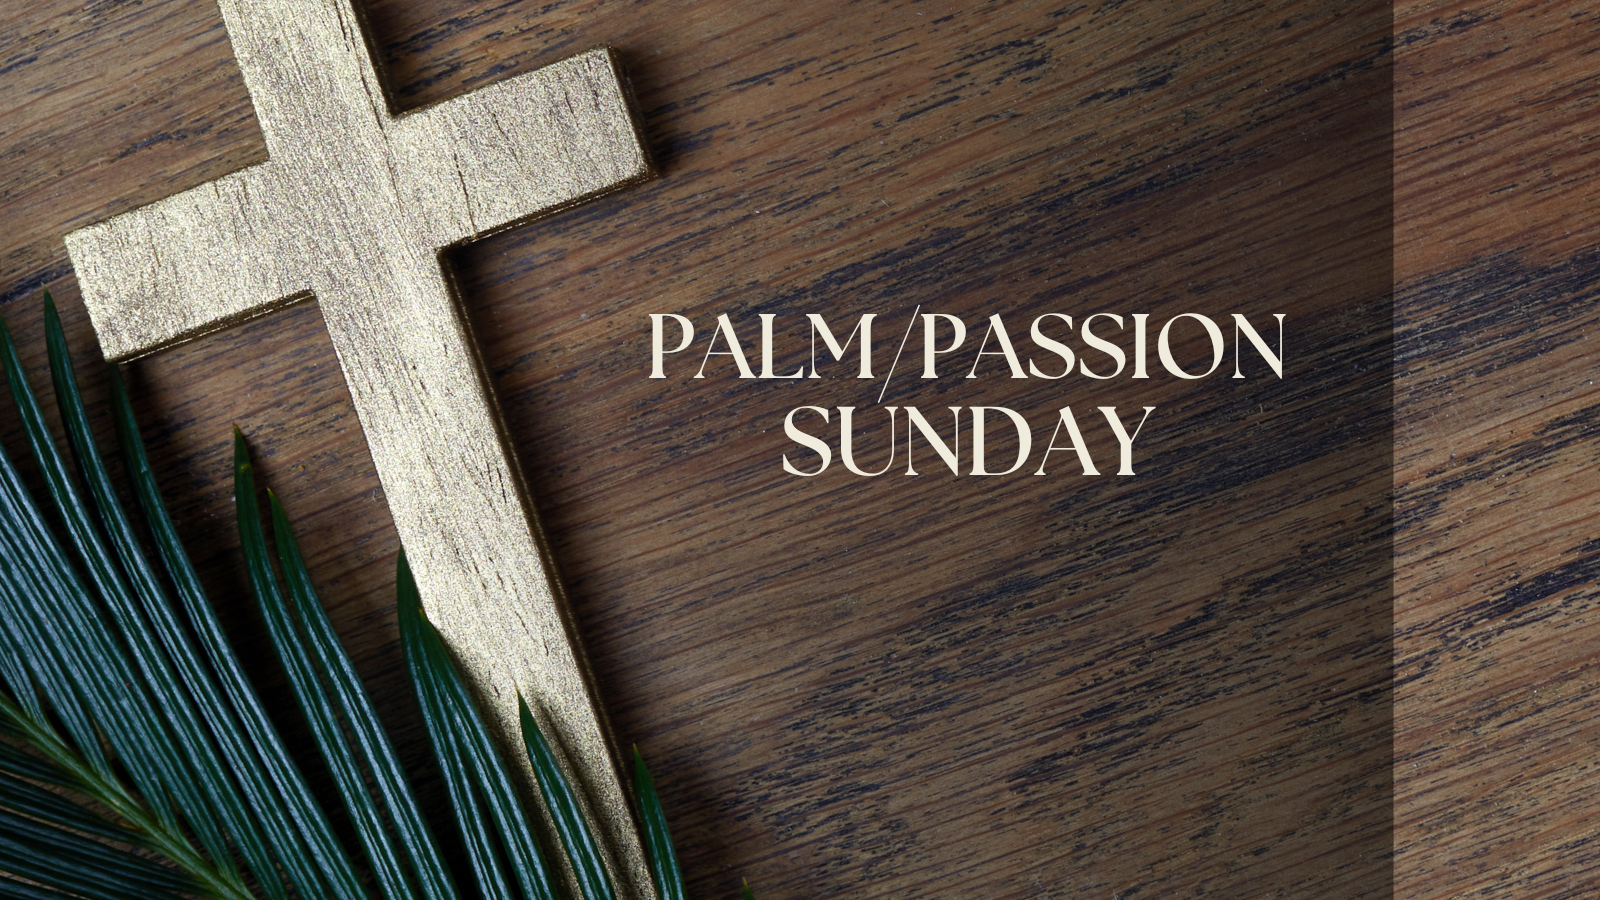 Palm/Passion Sunday